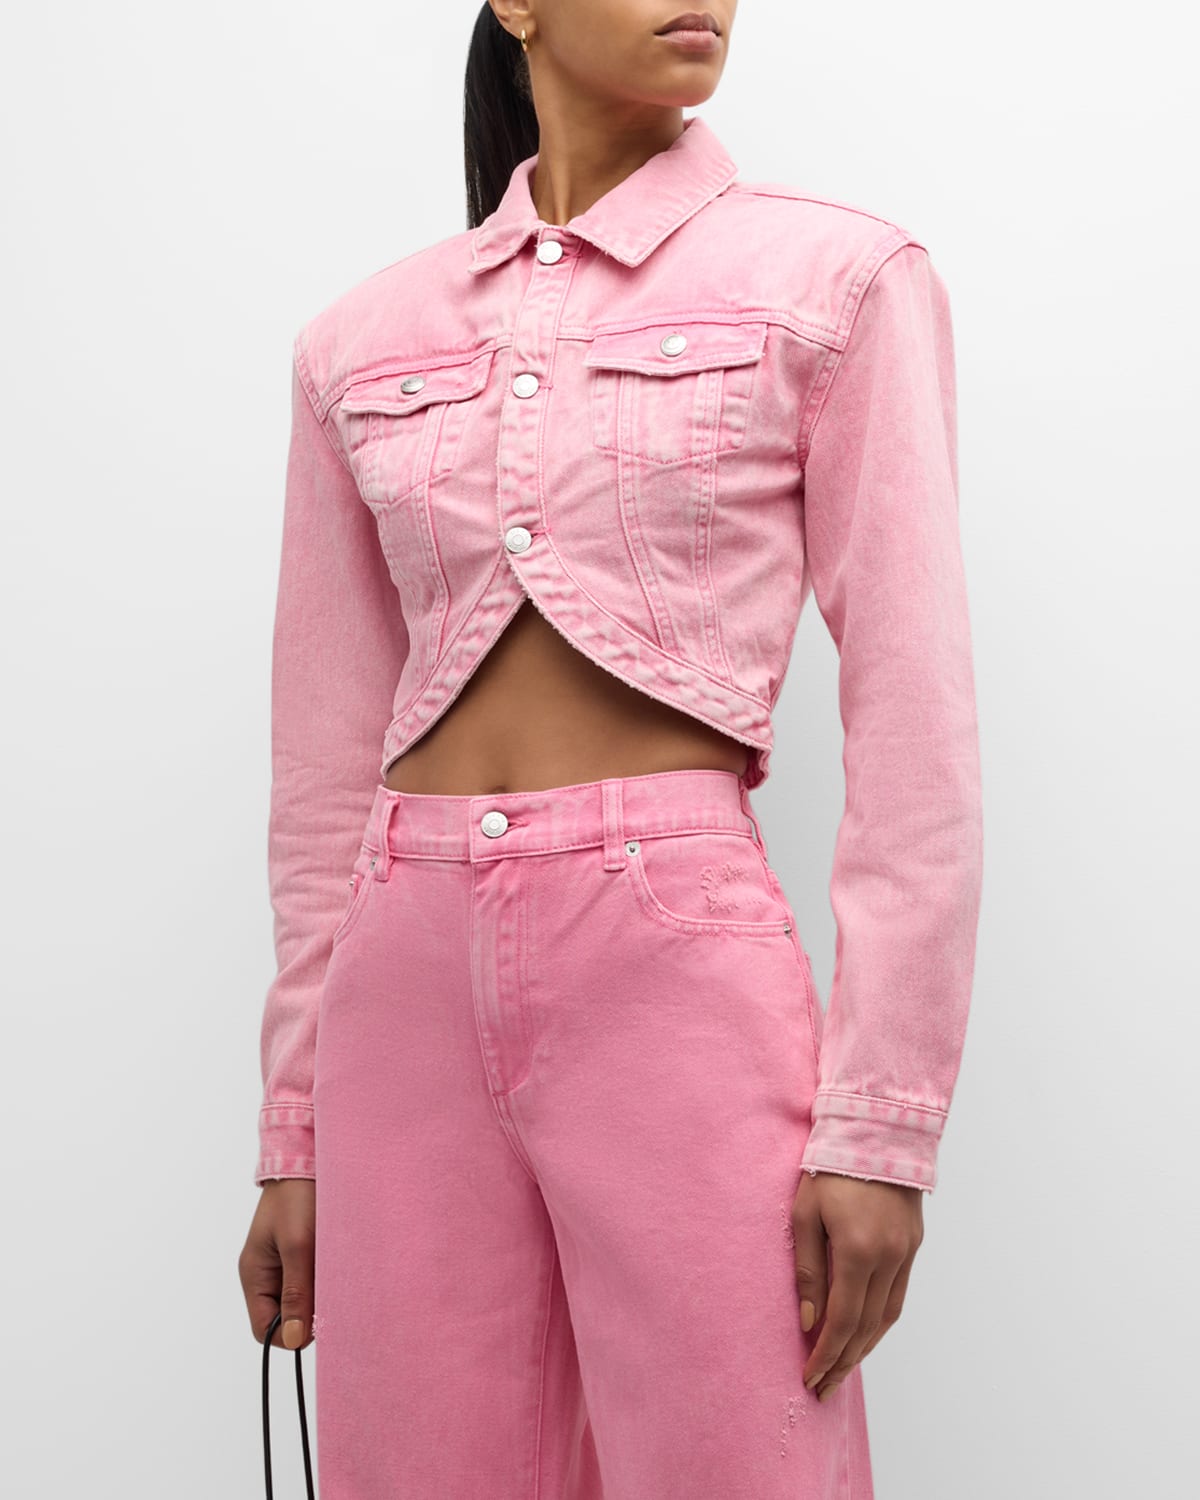 Ser.o.ya Faith Cropped Denim Jacket In Malibu Pink